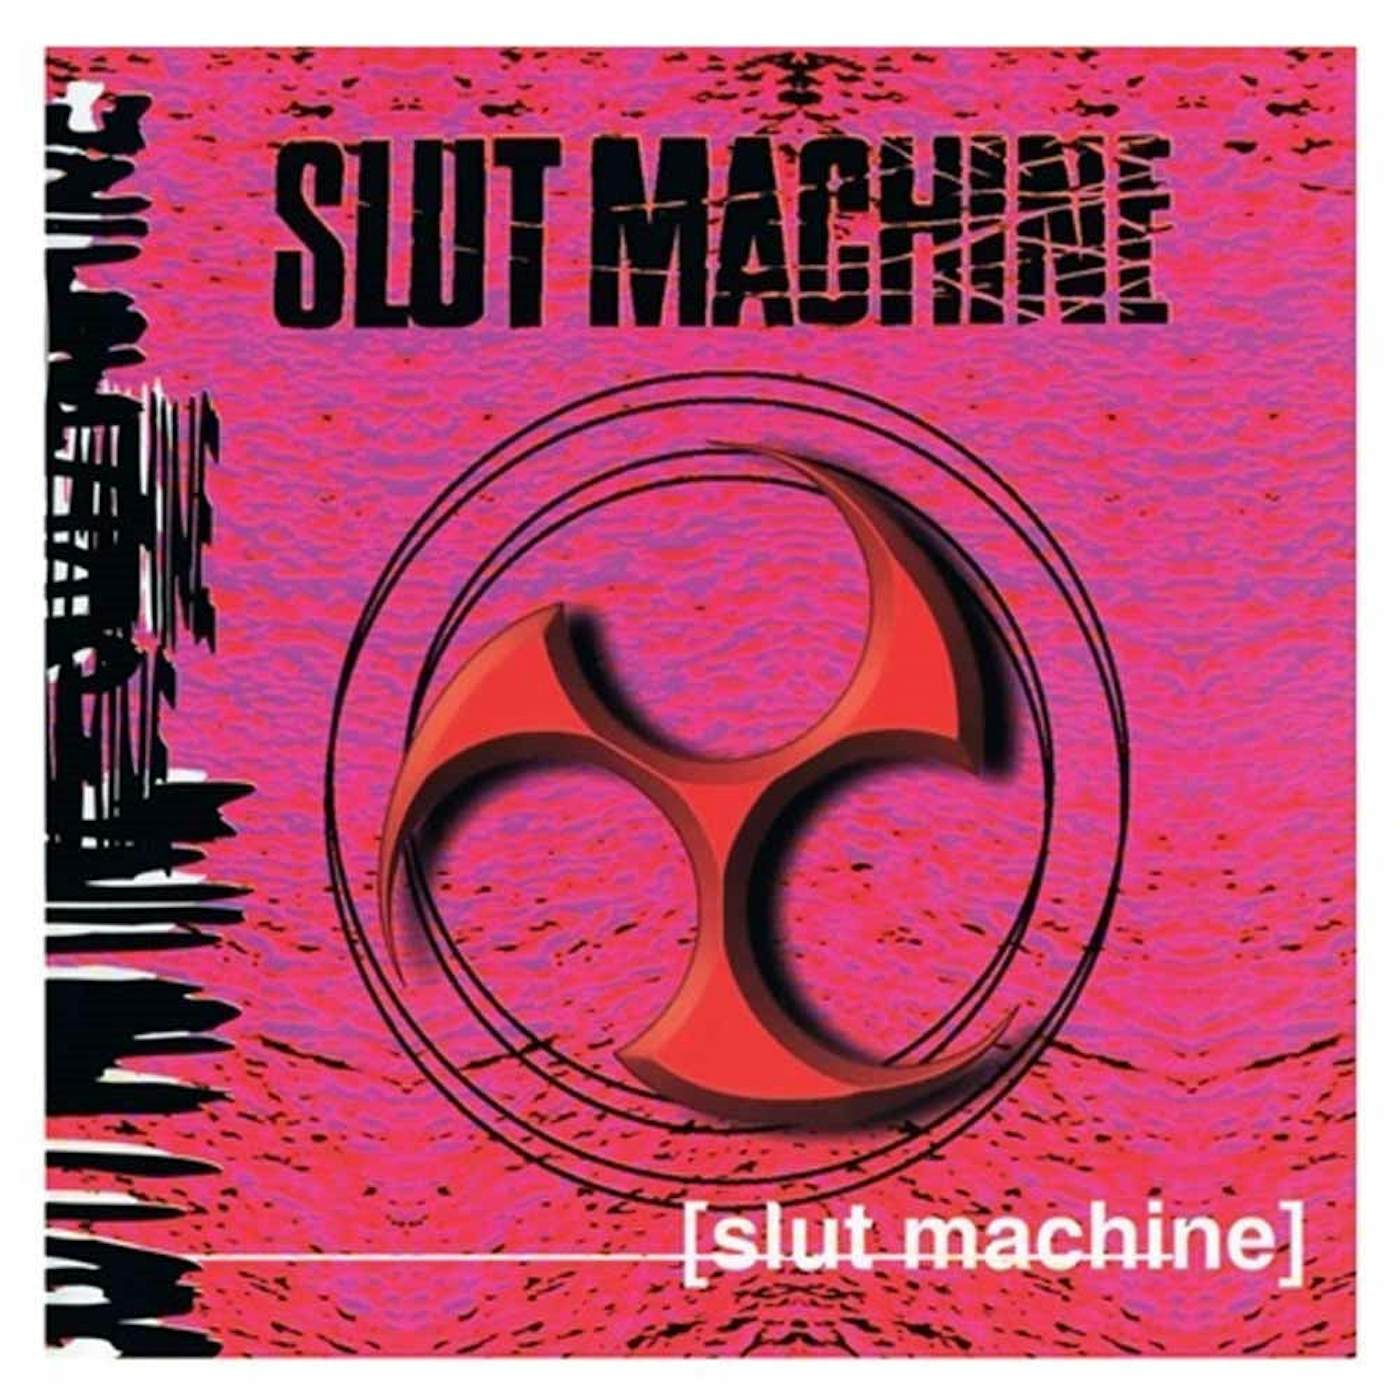 The Slut Machine LP - Slut Machine (Vinyl)